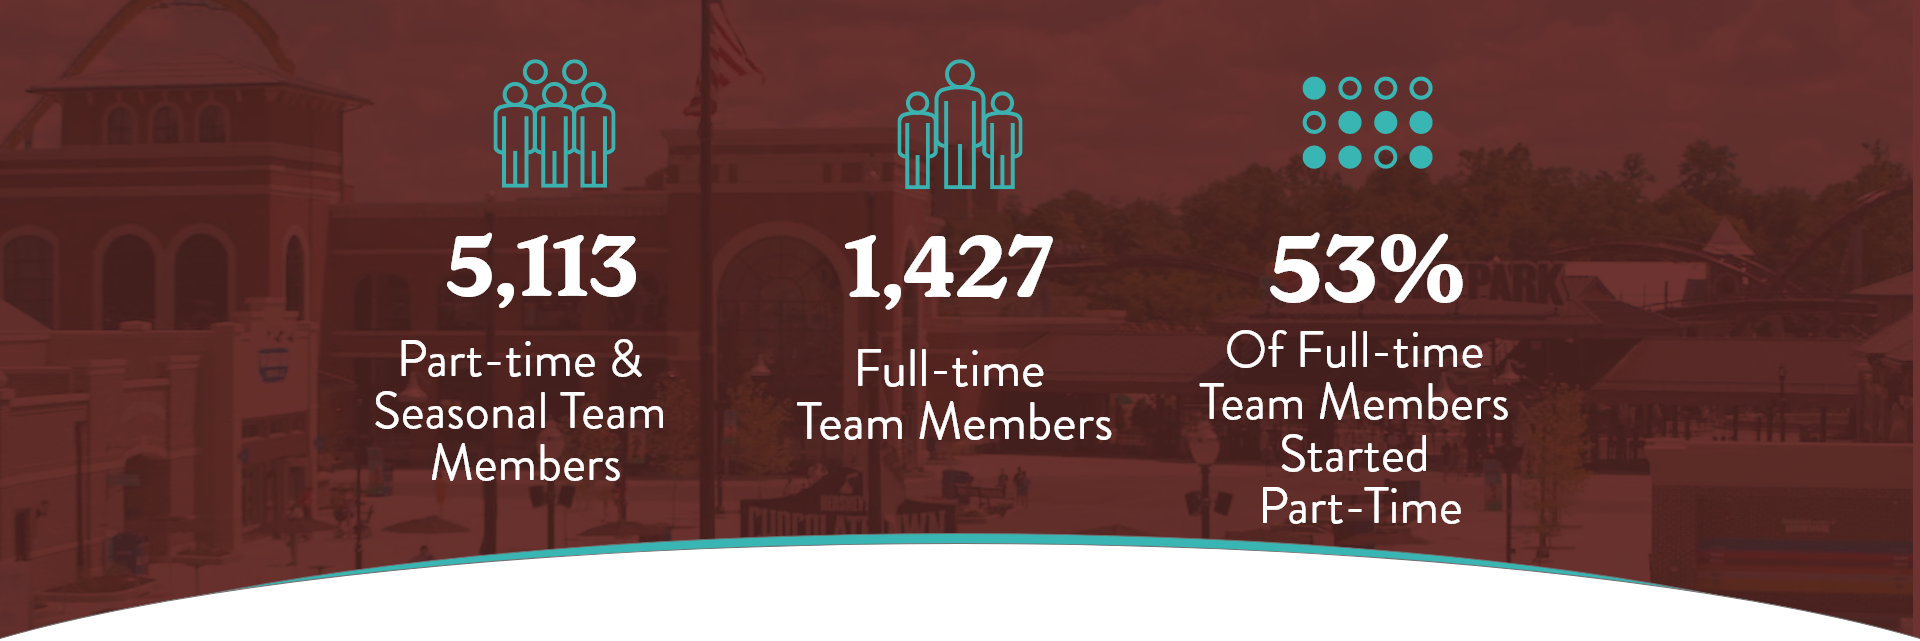 5113 part time & seasonal team members. 1427 full time team members. 53% of full time team members started part time